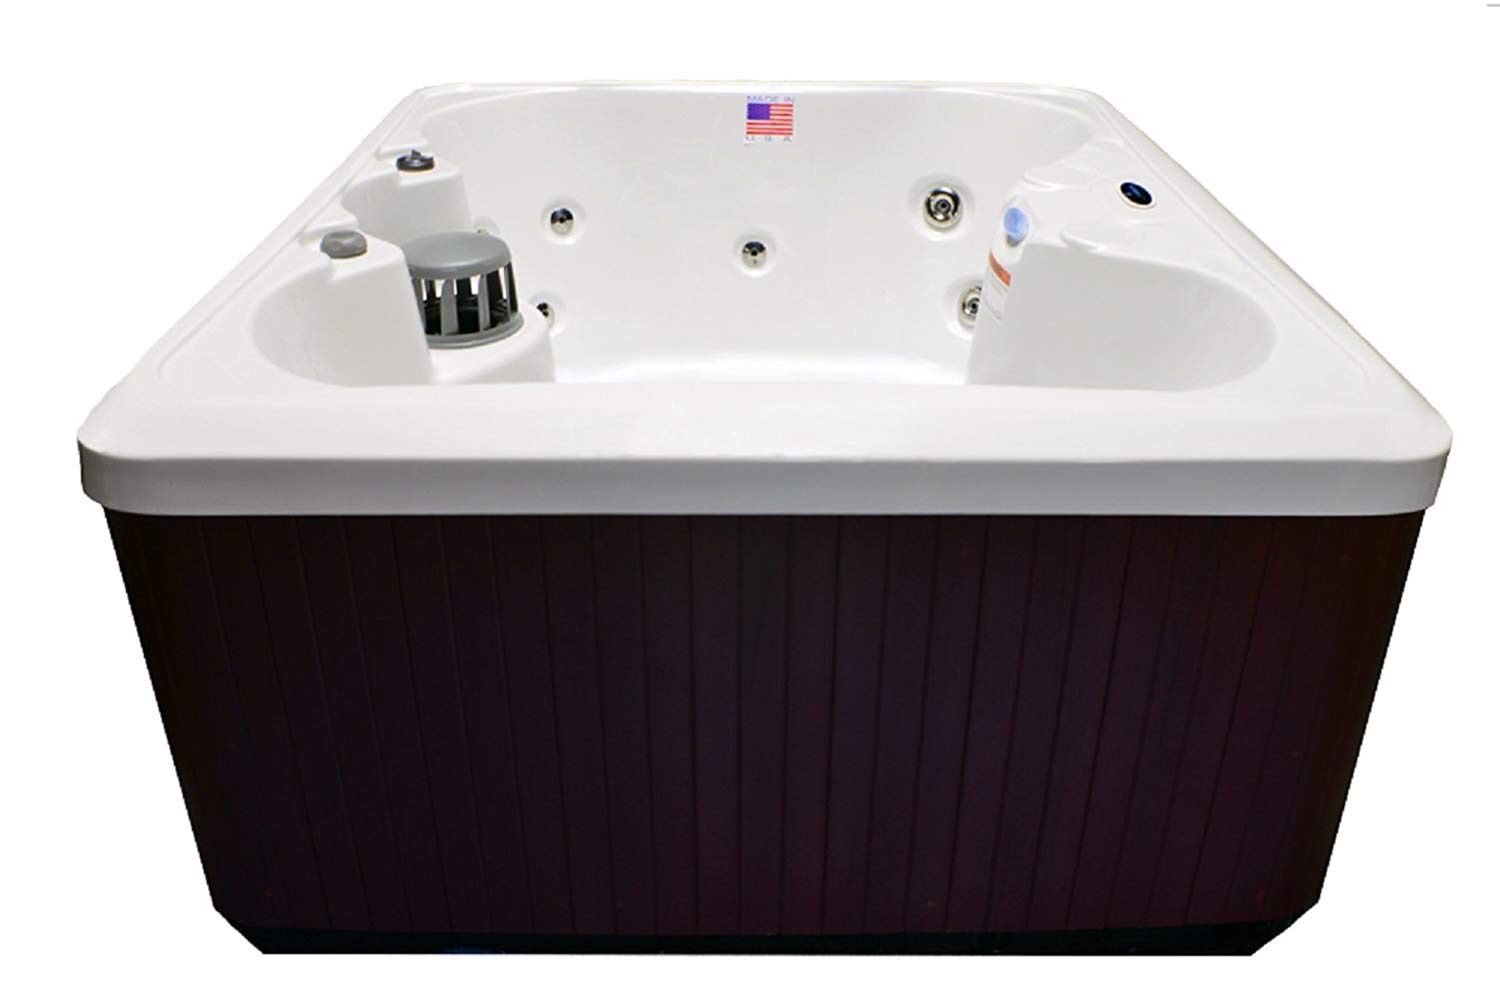 Jacuzzi hot tub spa - super nice!